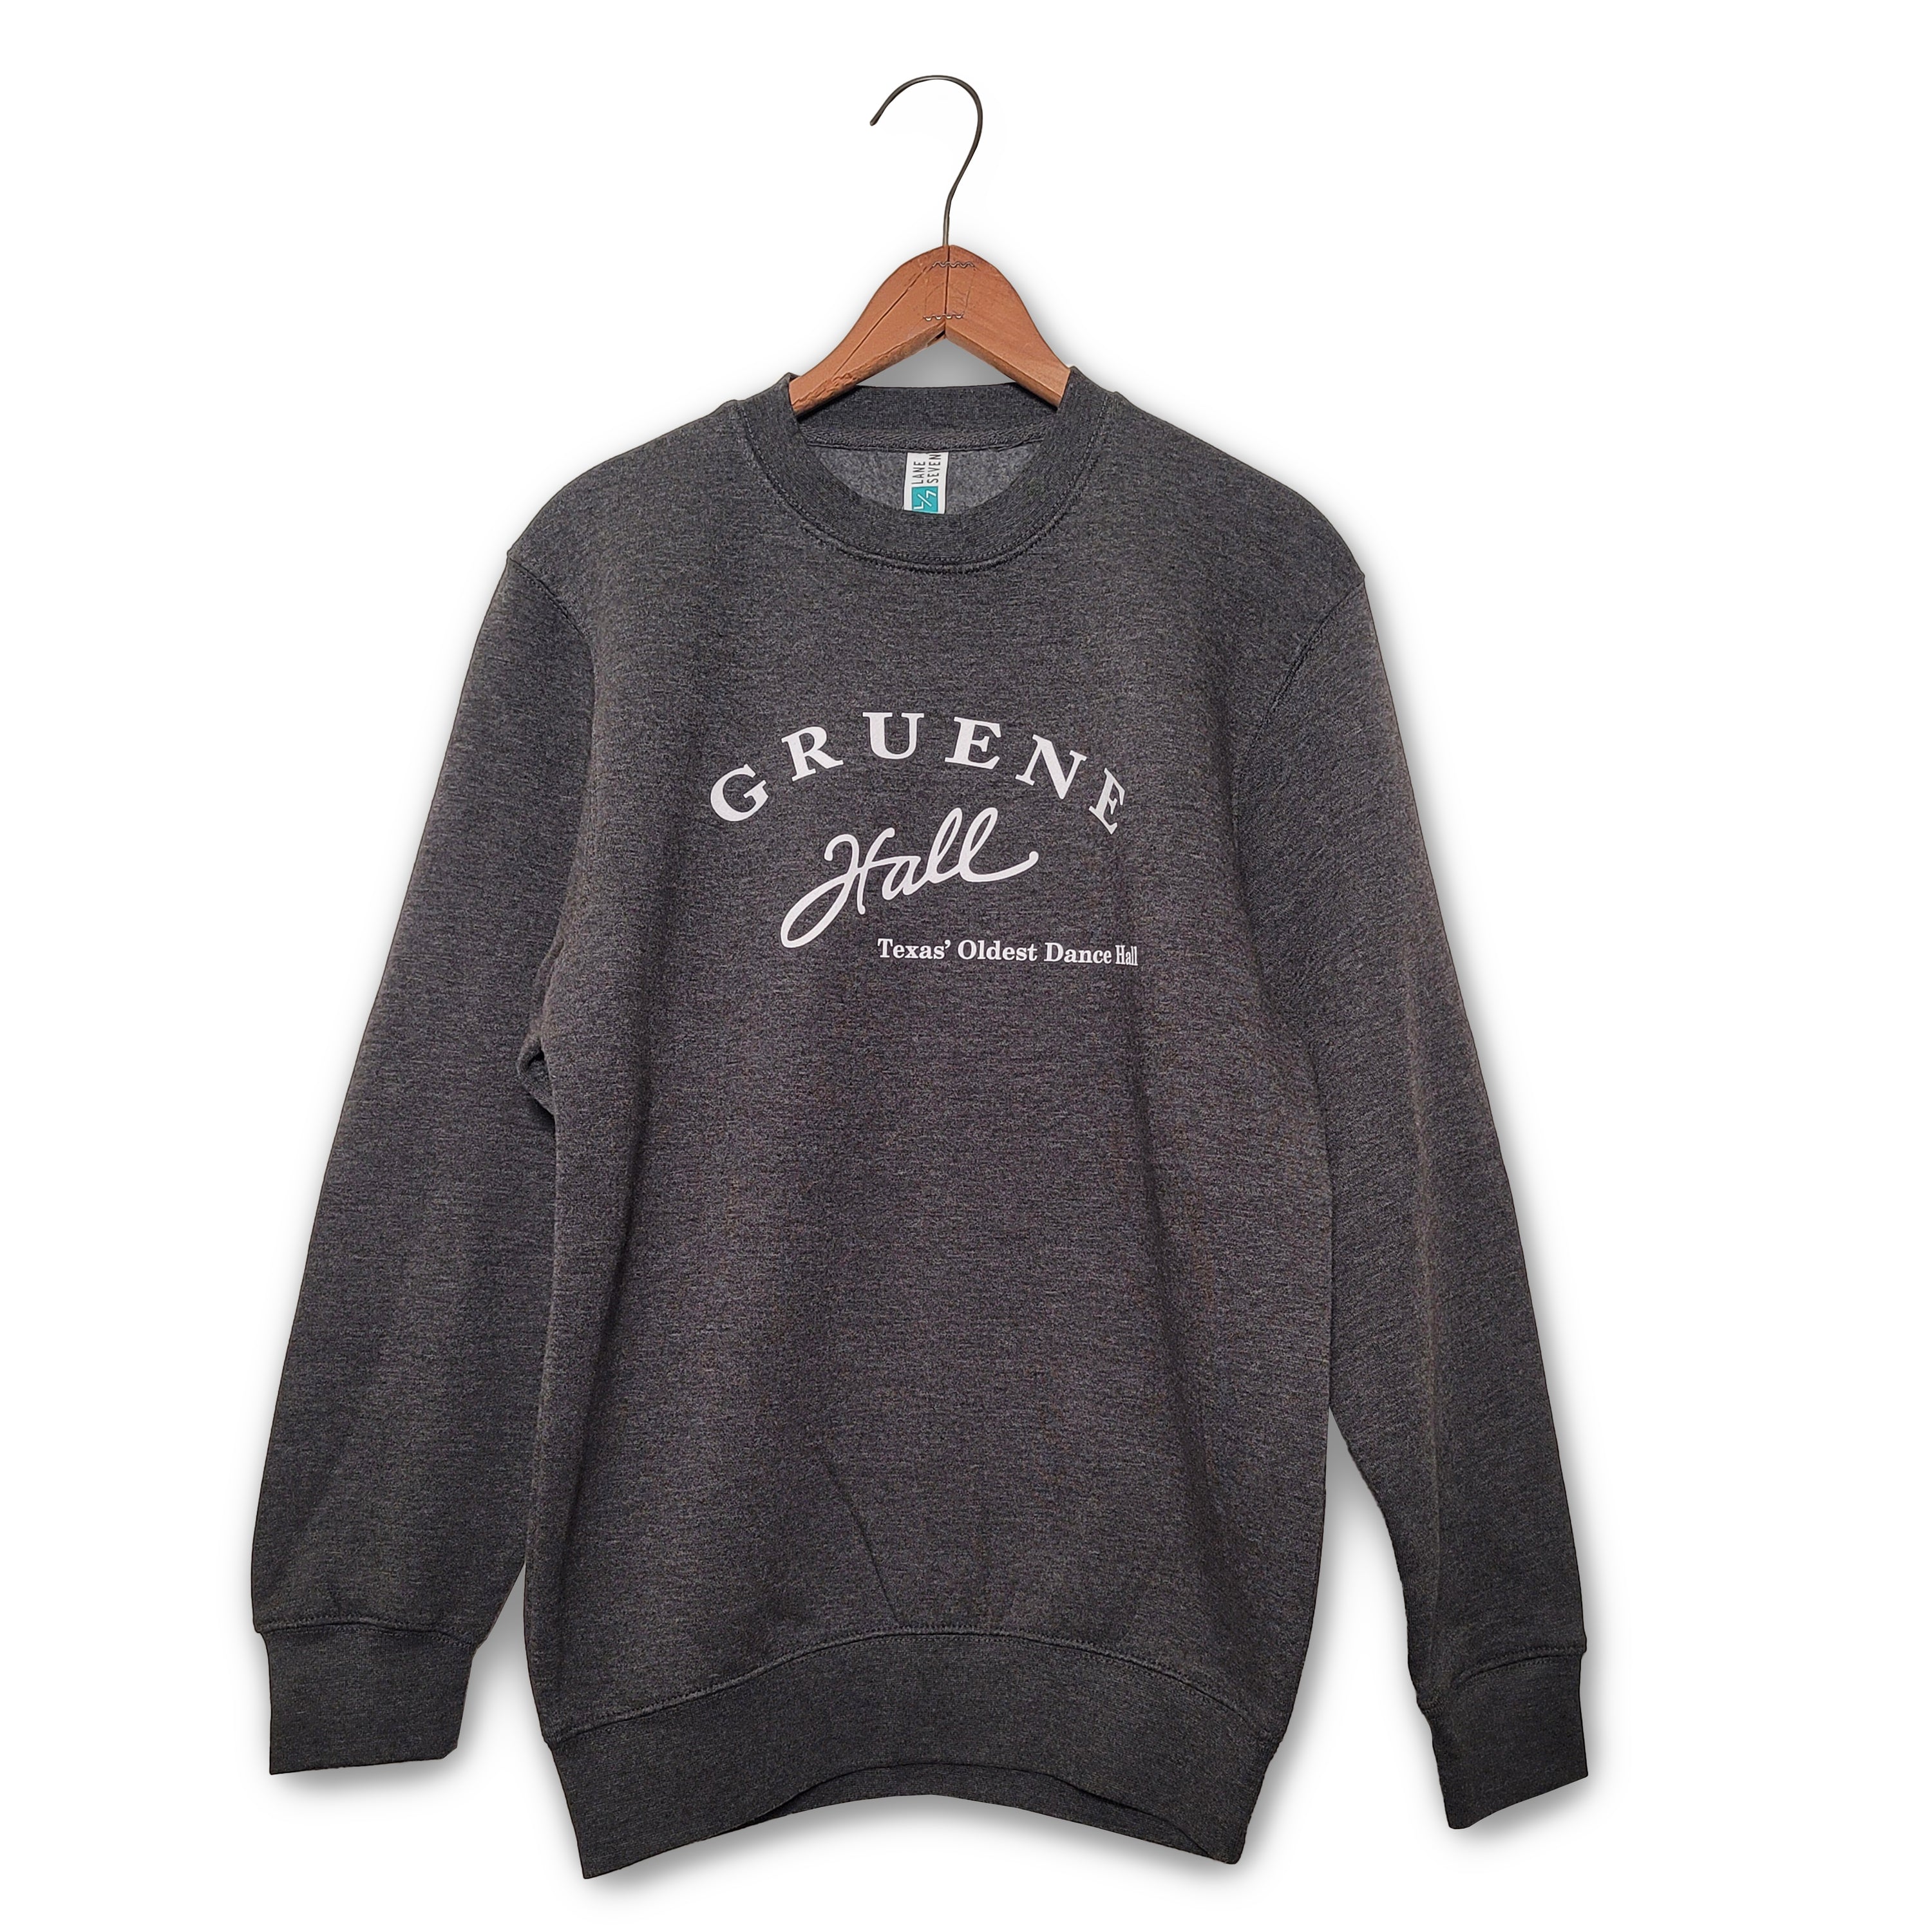 Gruene Hall Logo Crewneck Pullover Sweatshirt